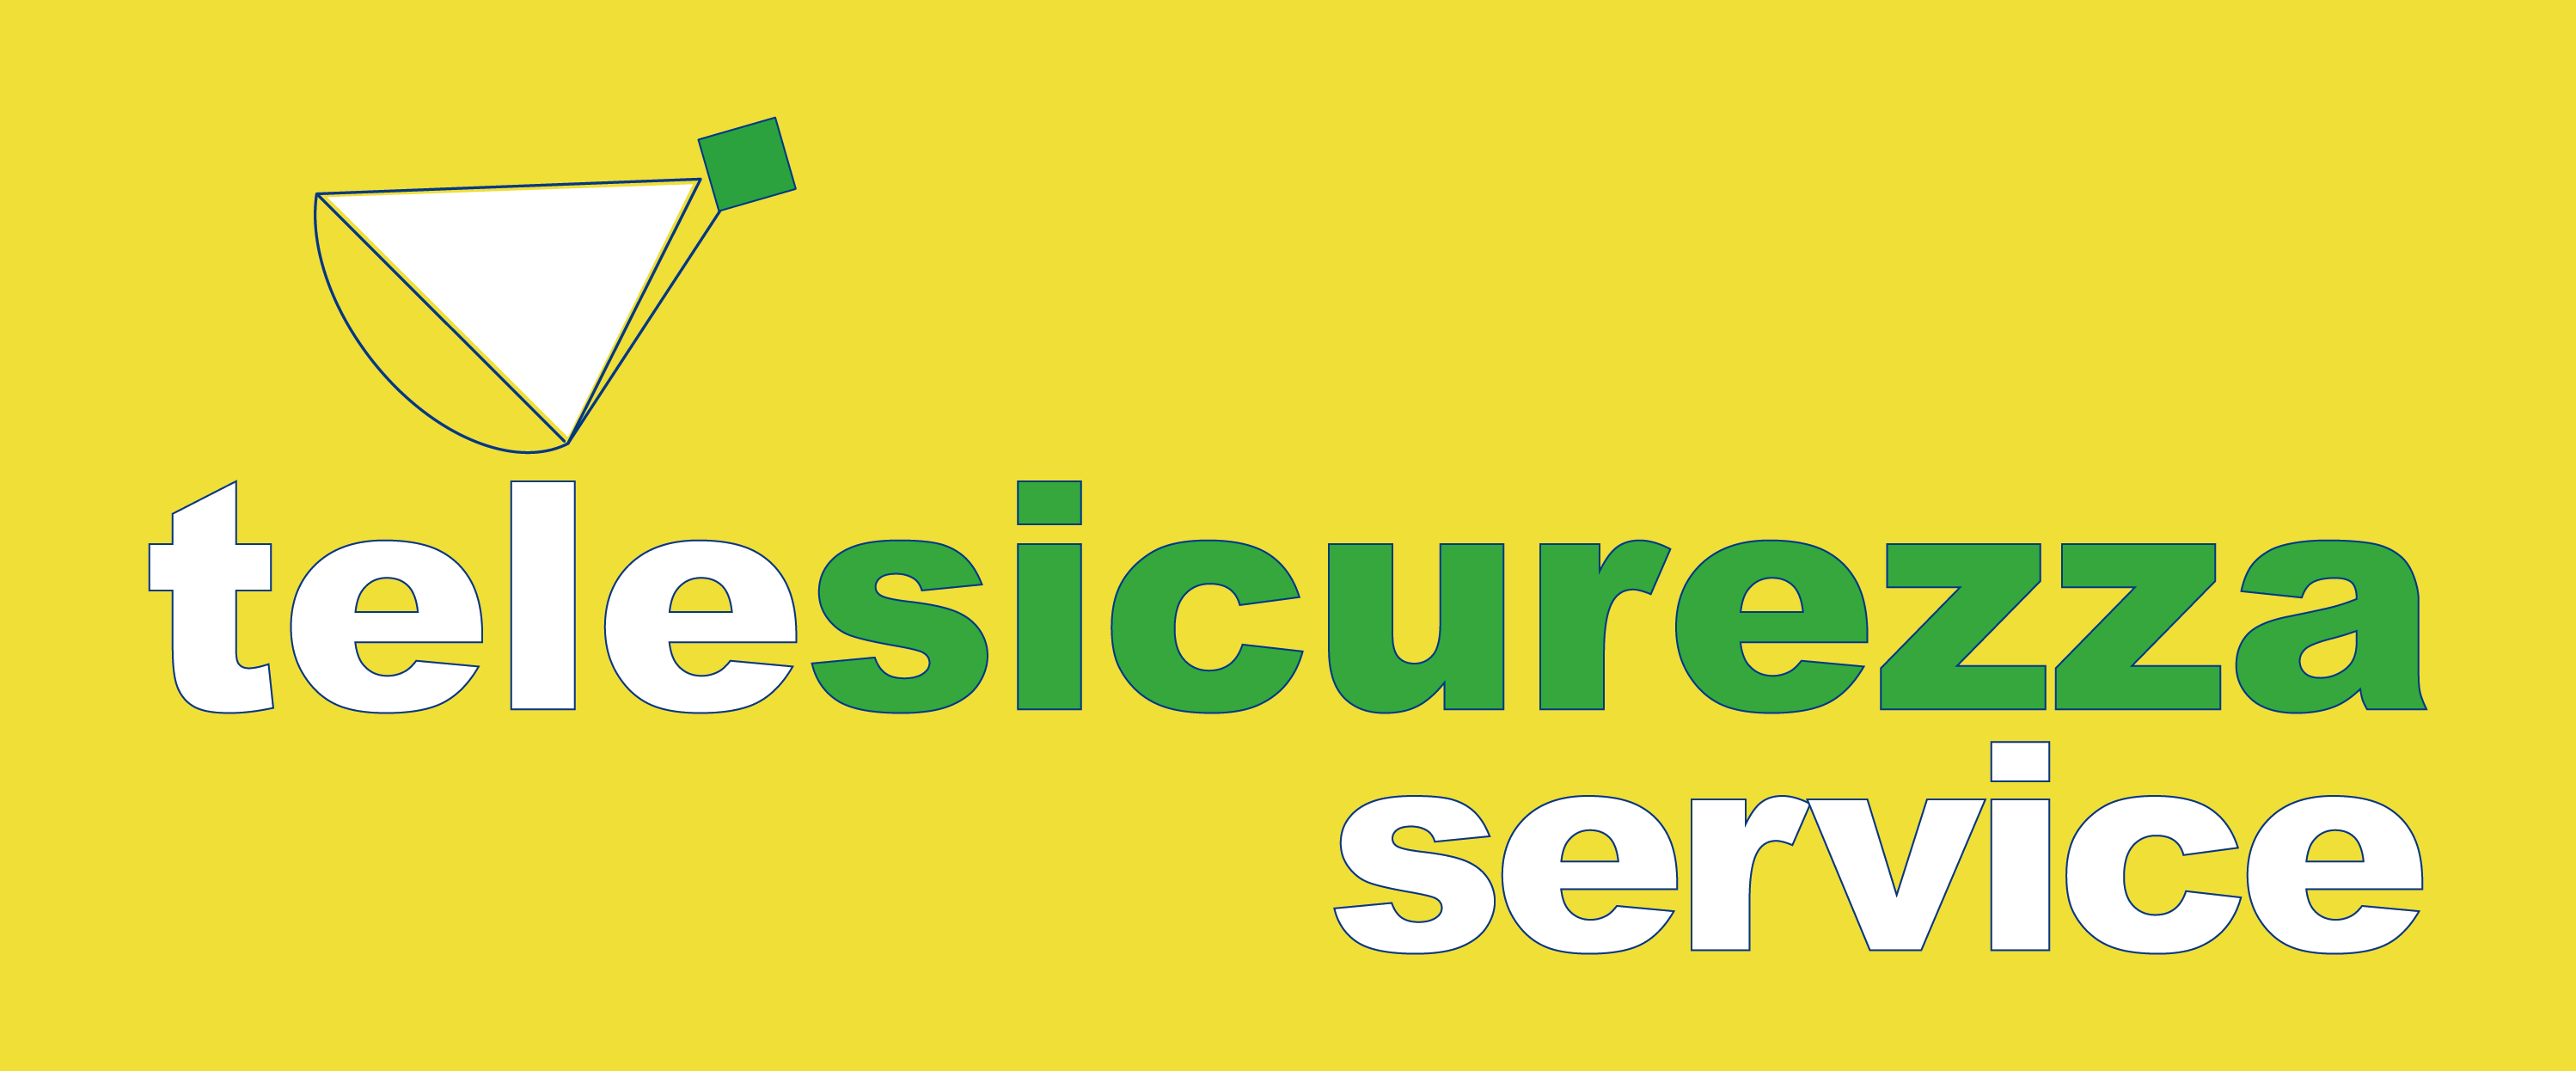 Logo Telesicurezza Service